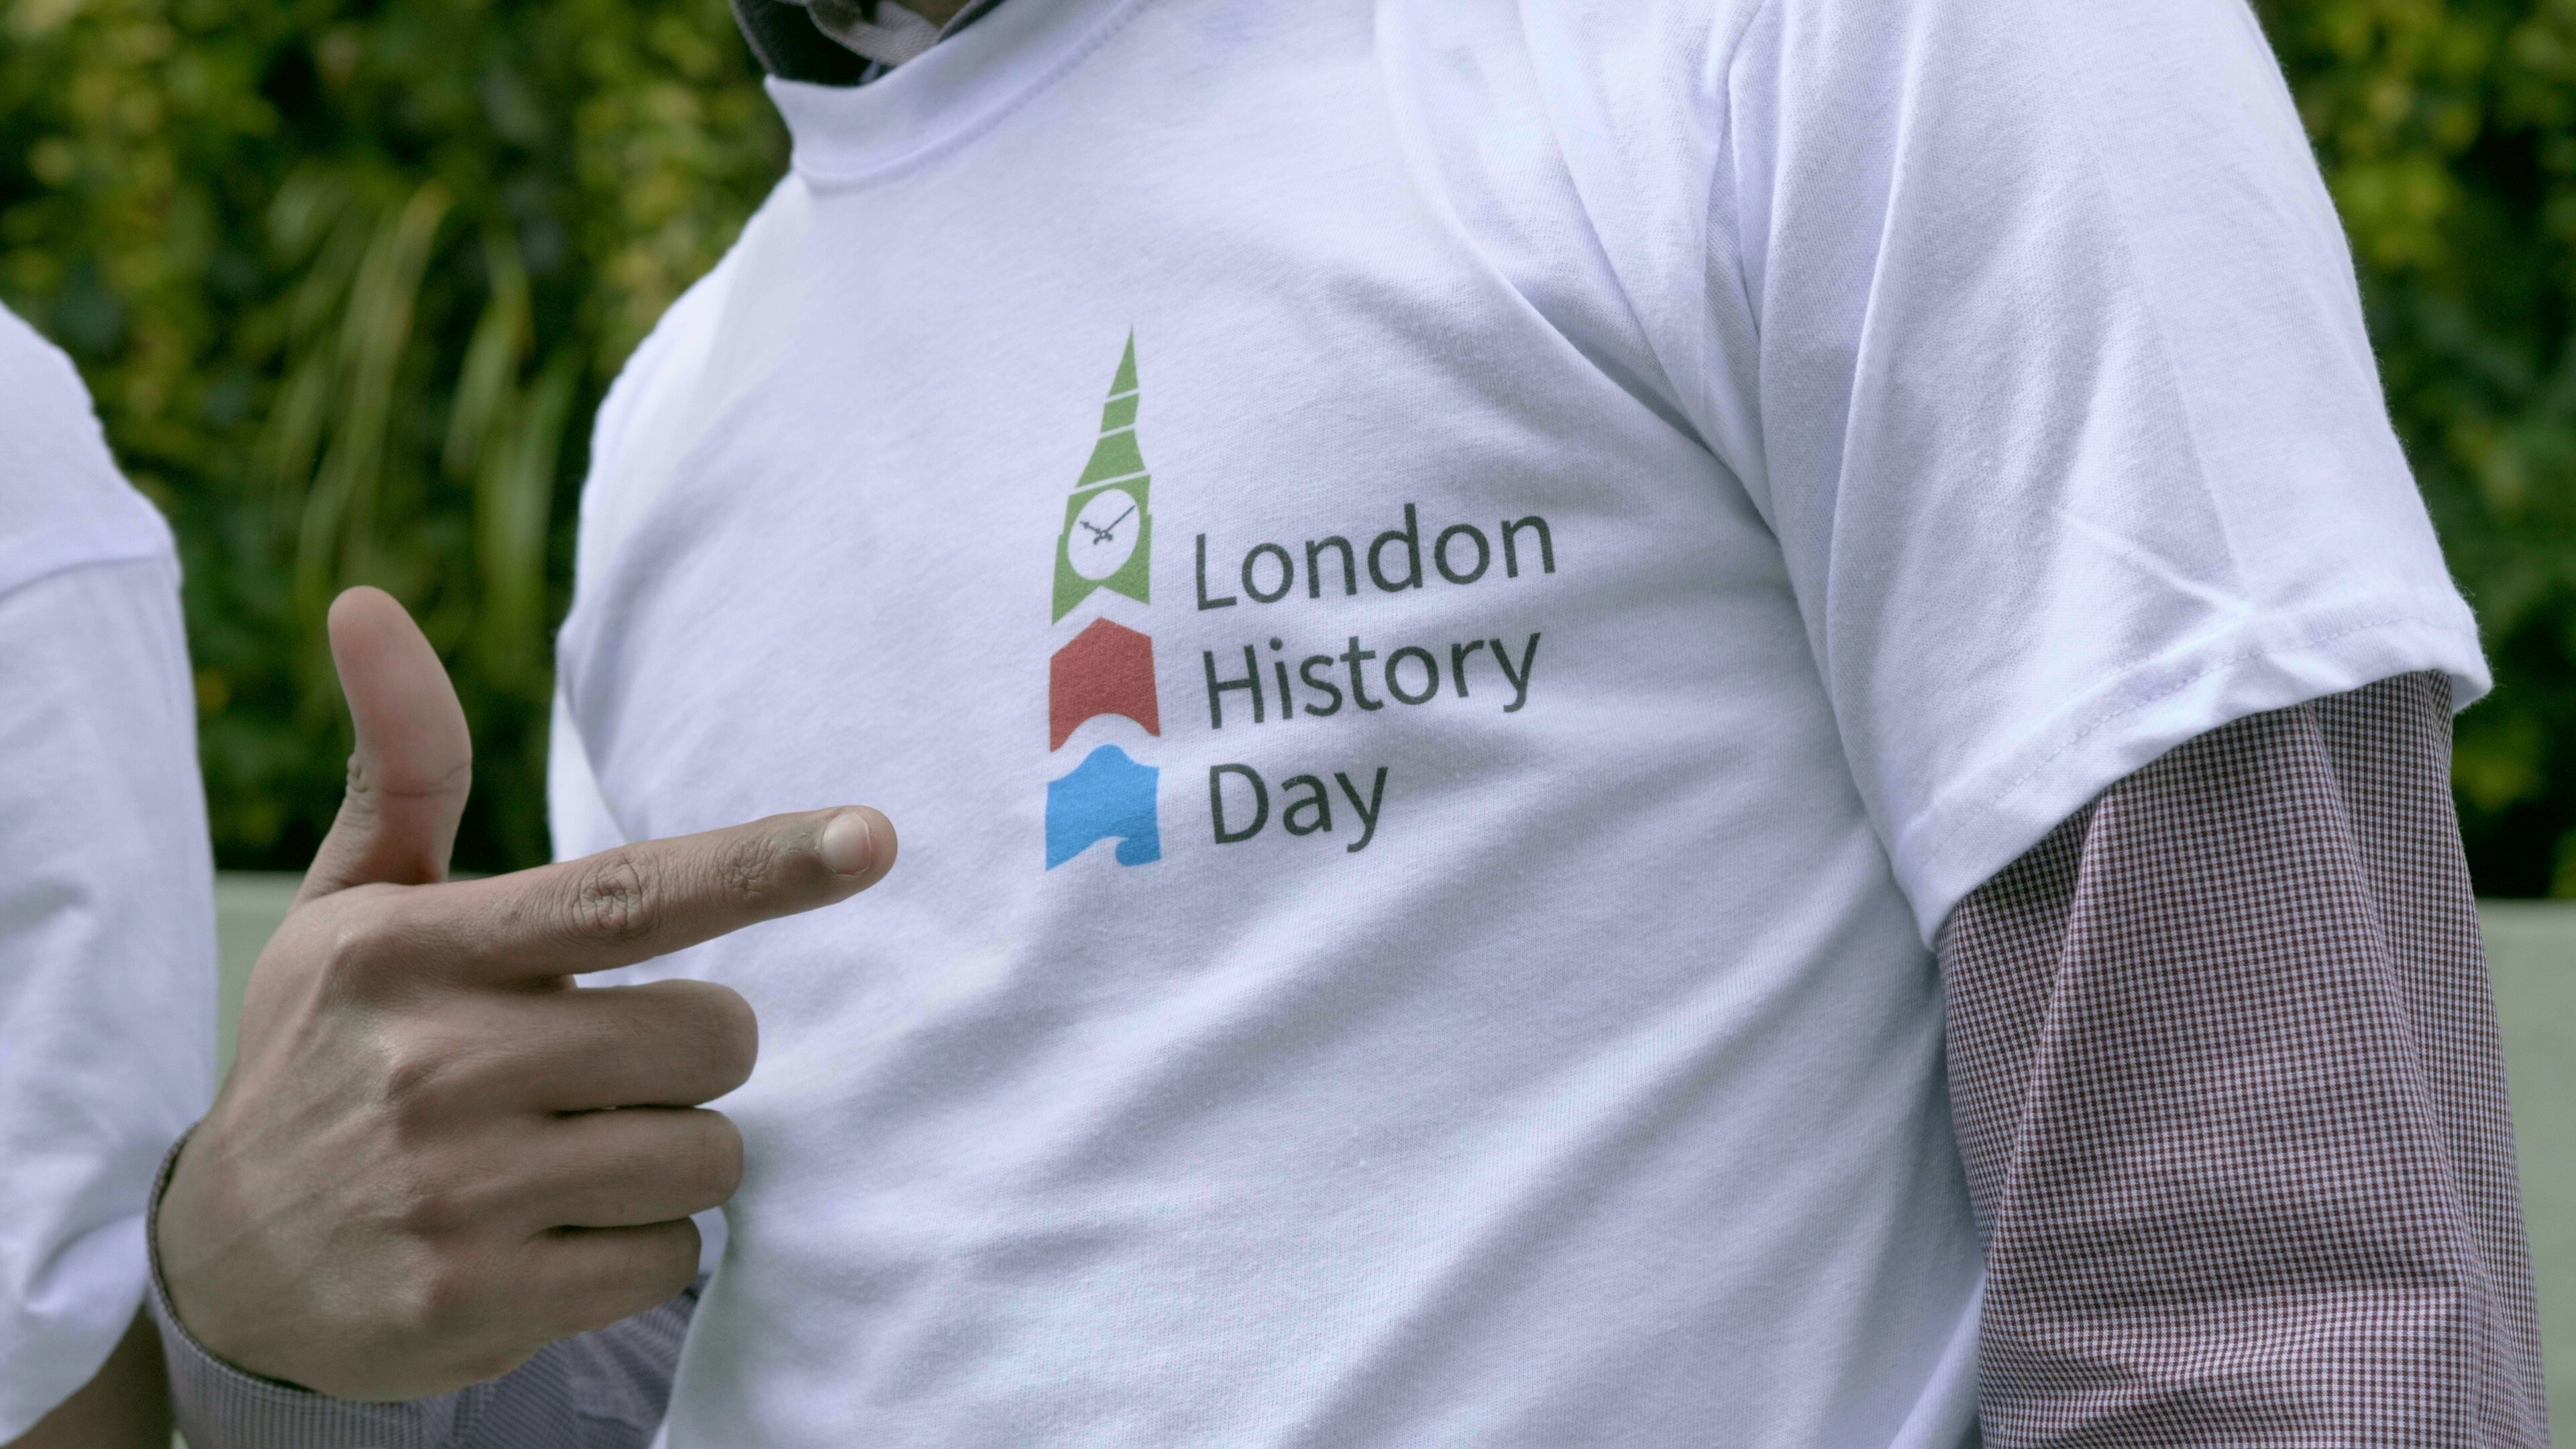 London History Day logo on a white tshirt